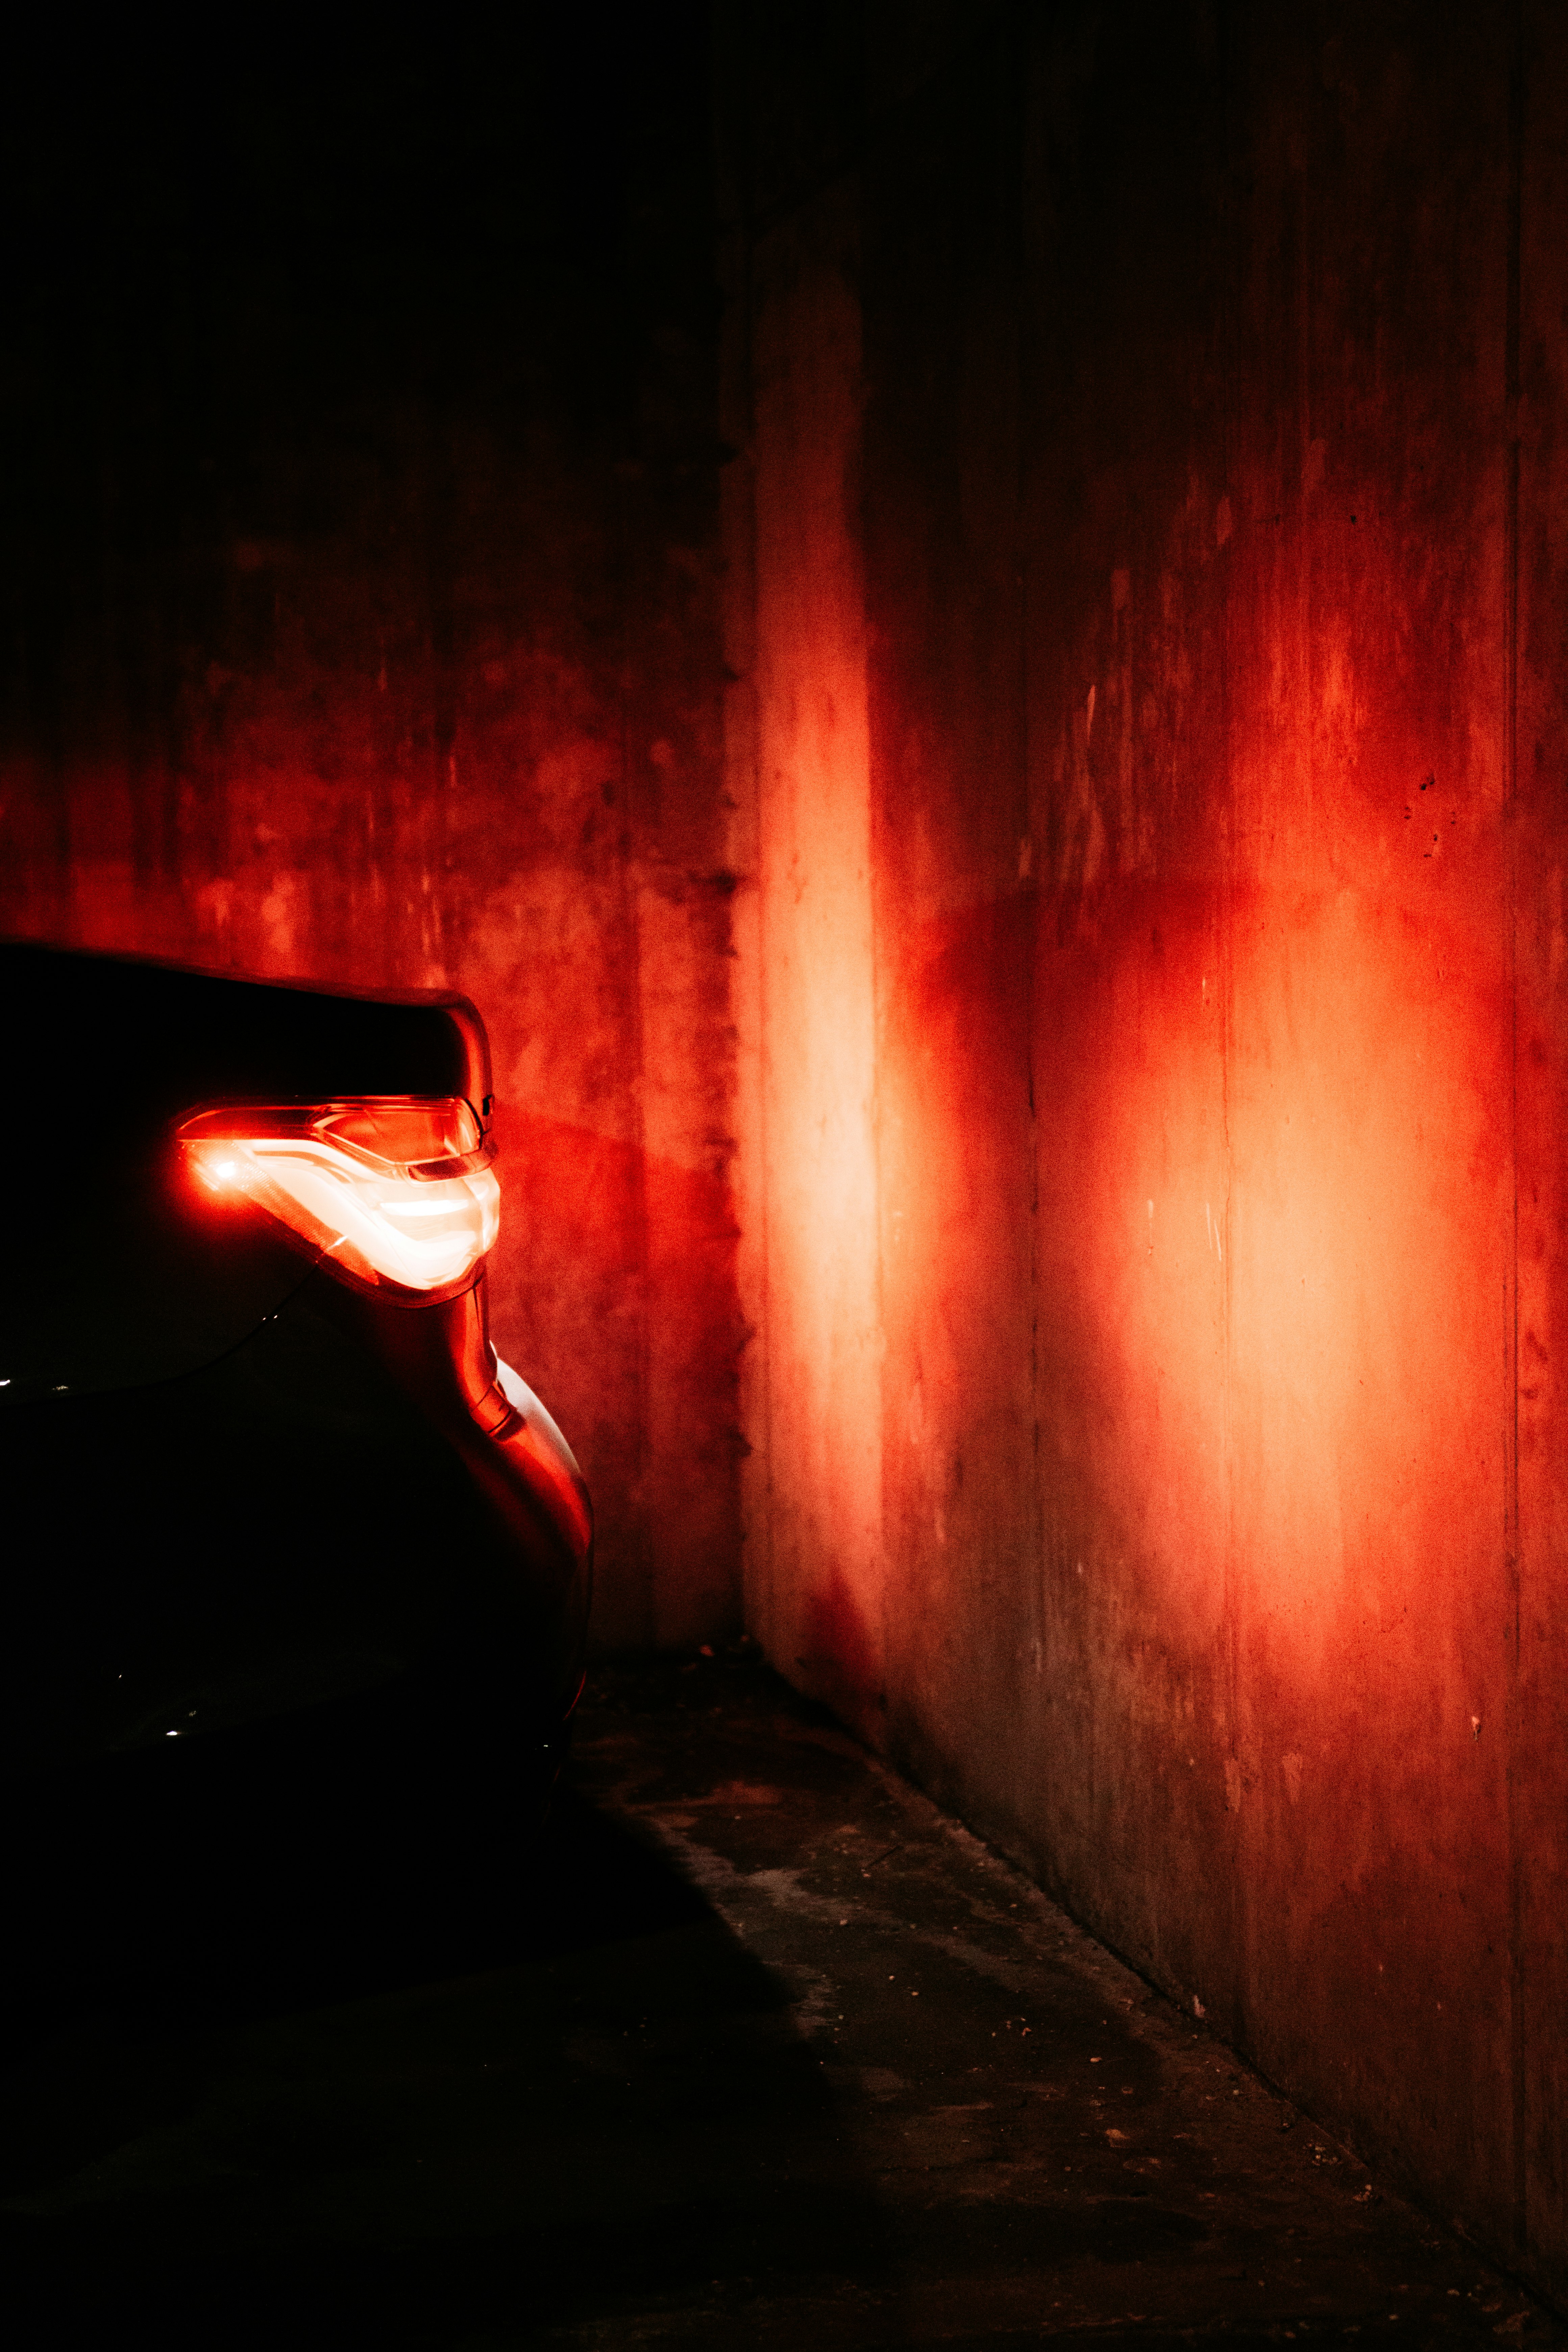 red light in a dark tunnel